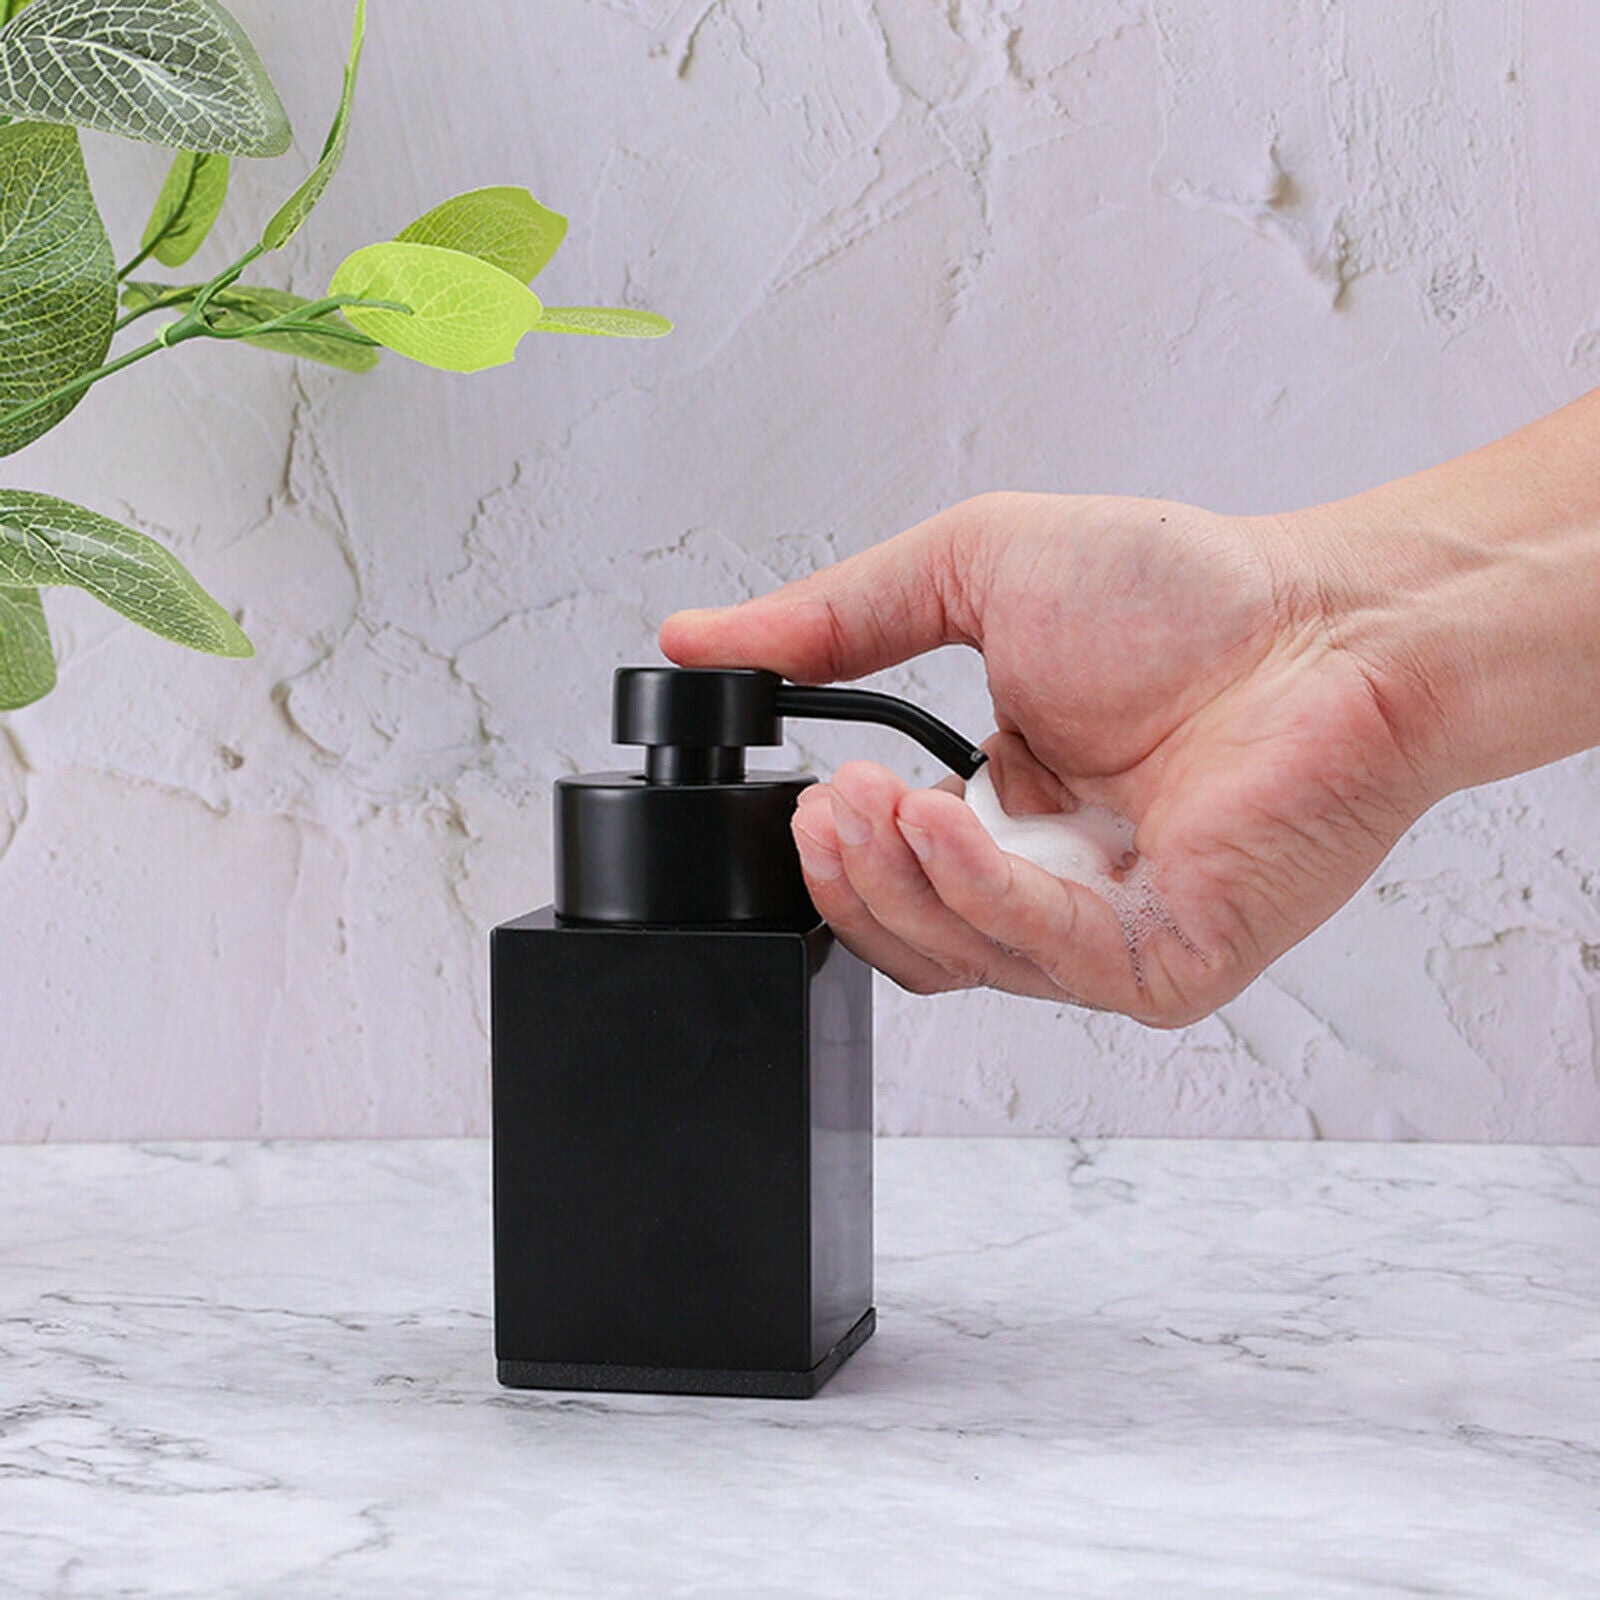 200ml Soap Dispenser Bottle for Bathroom Shampoo Shower Gel Containers